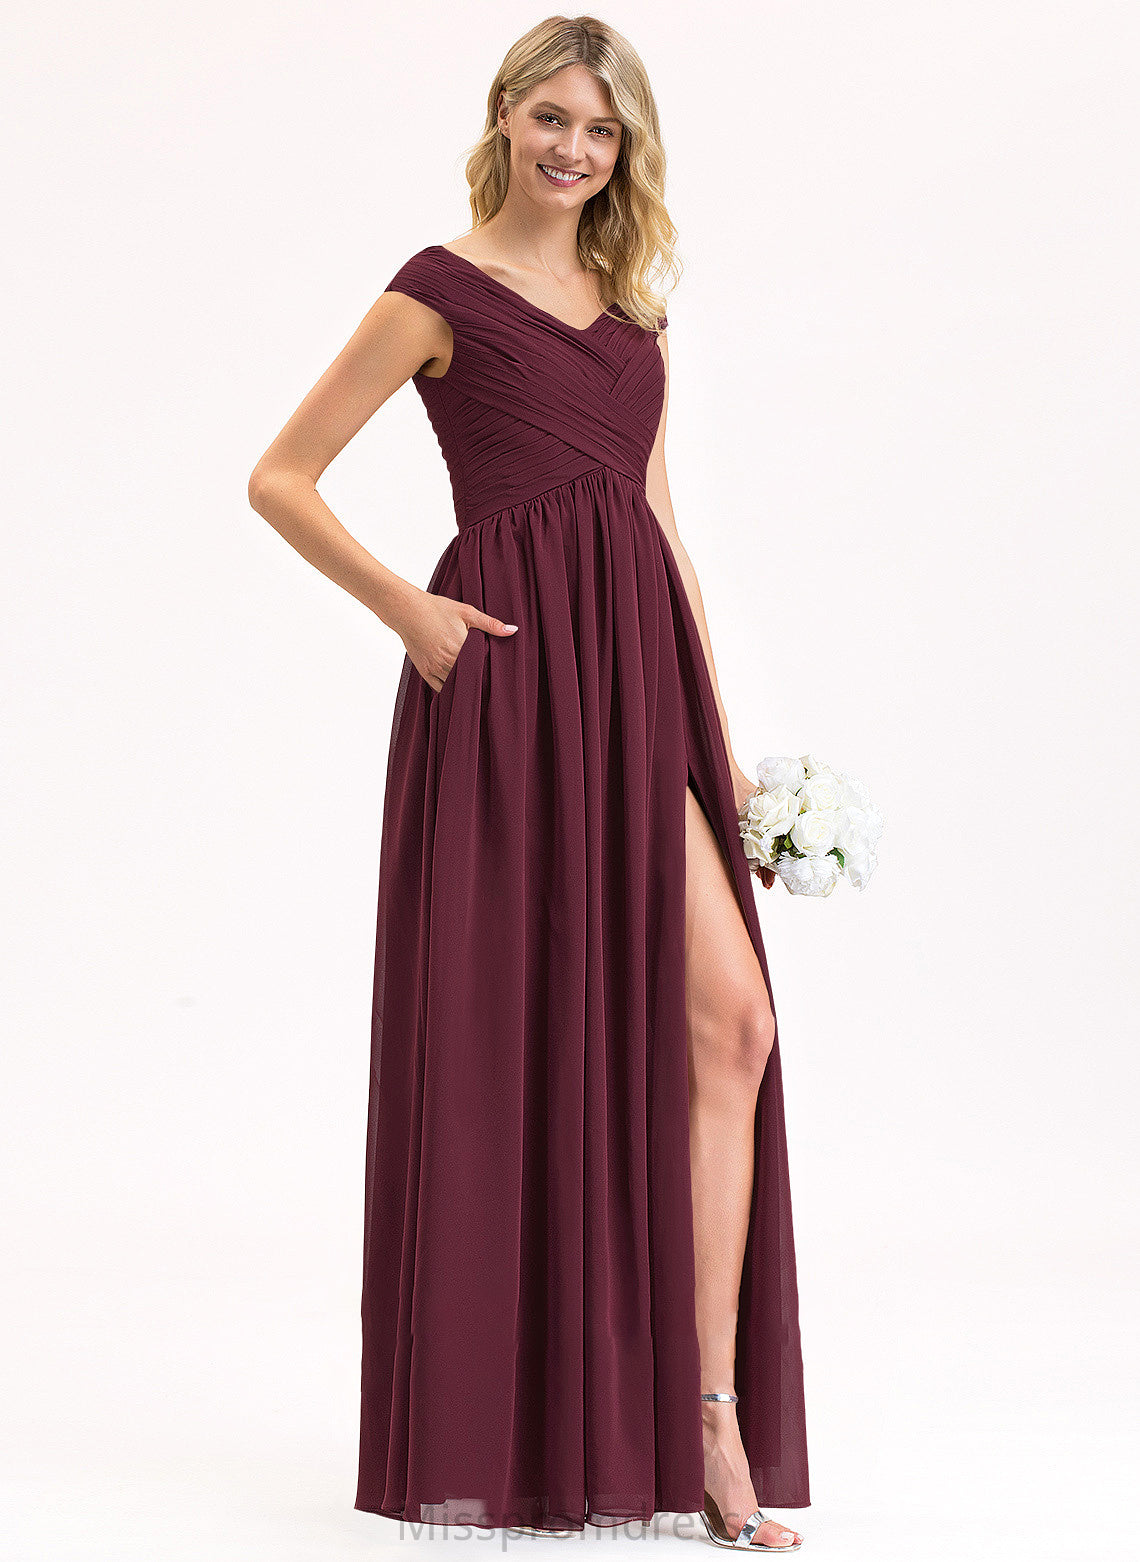 SplitFront Fabric Ruffle Pockets Embellishment Length A-Line Floor-Length Silhouette Off-the-Shoulder Neckline Rayne Bridesmaid Dresses